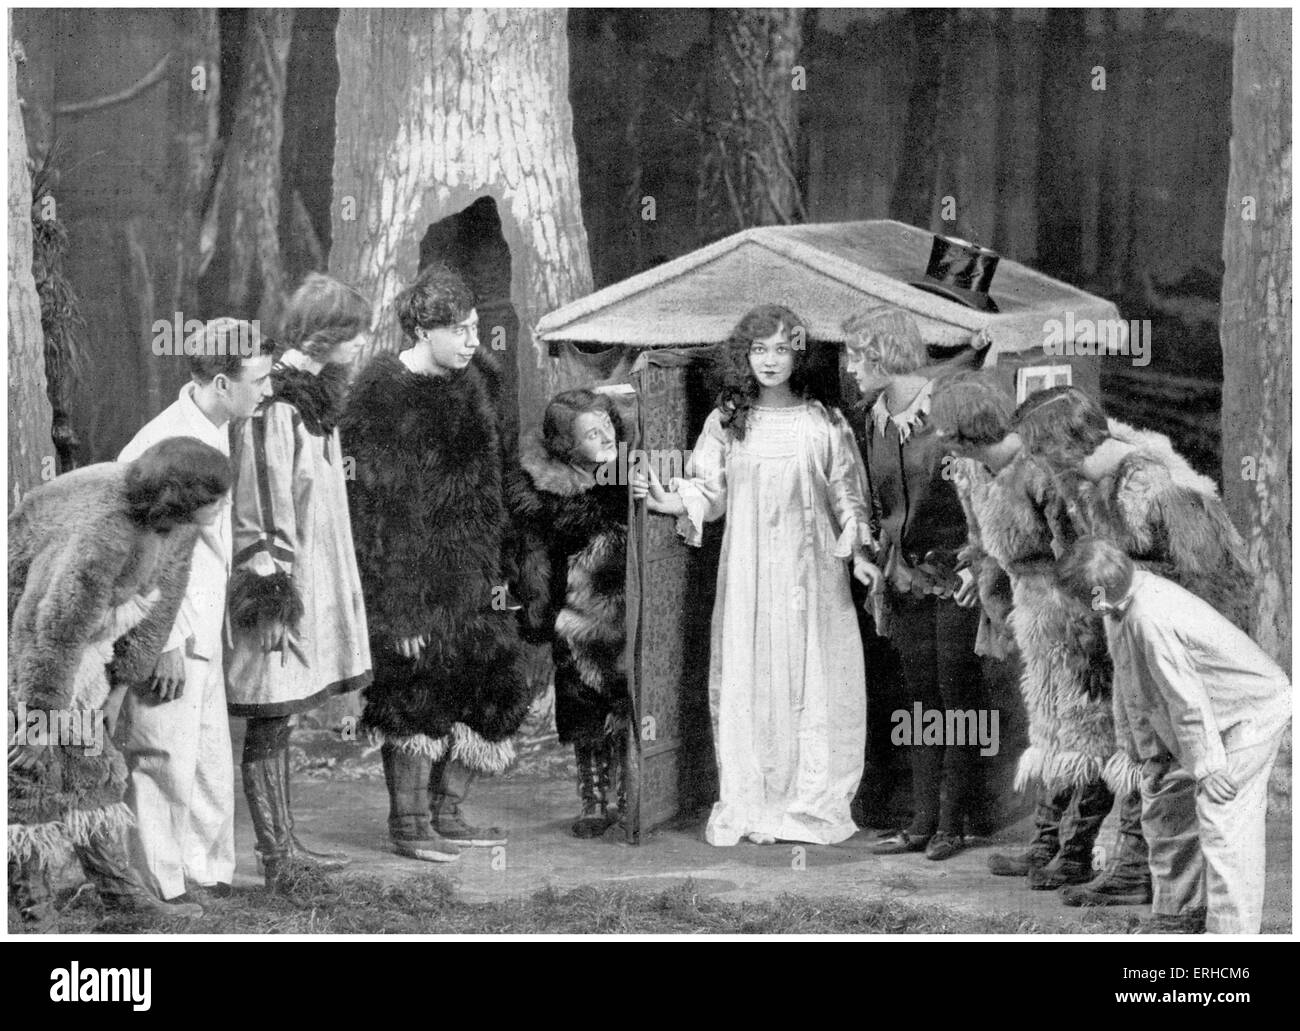 J M Barrie 's Peter Pan, musica da John Crook, al Vaudeville Theatre, Parigi. Atto II - Neverland. Da sinistra a destra: Winifred Foto Stock